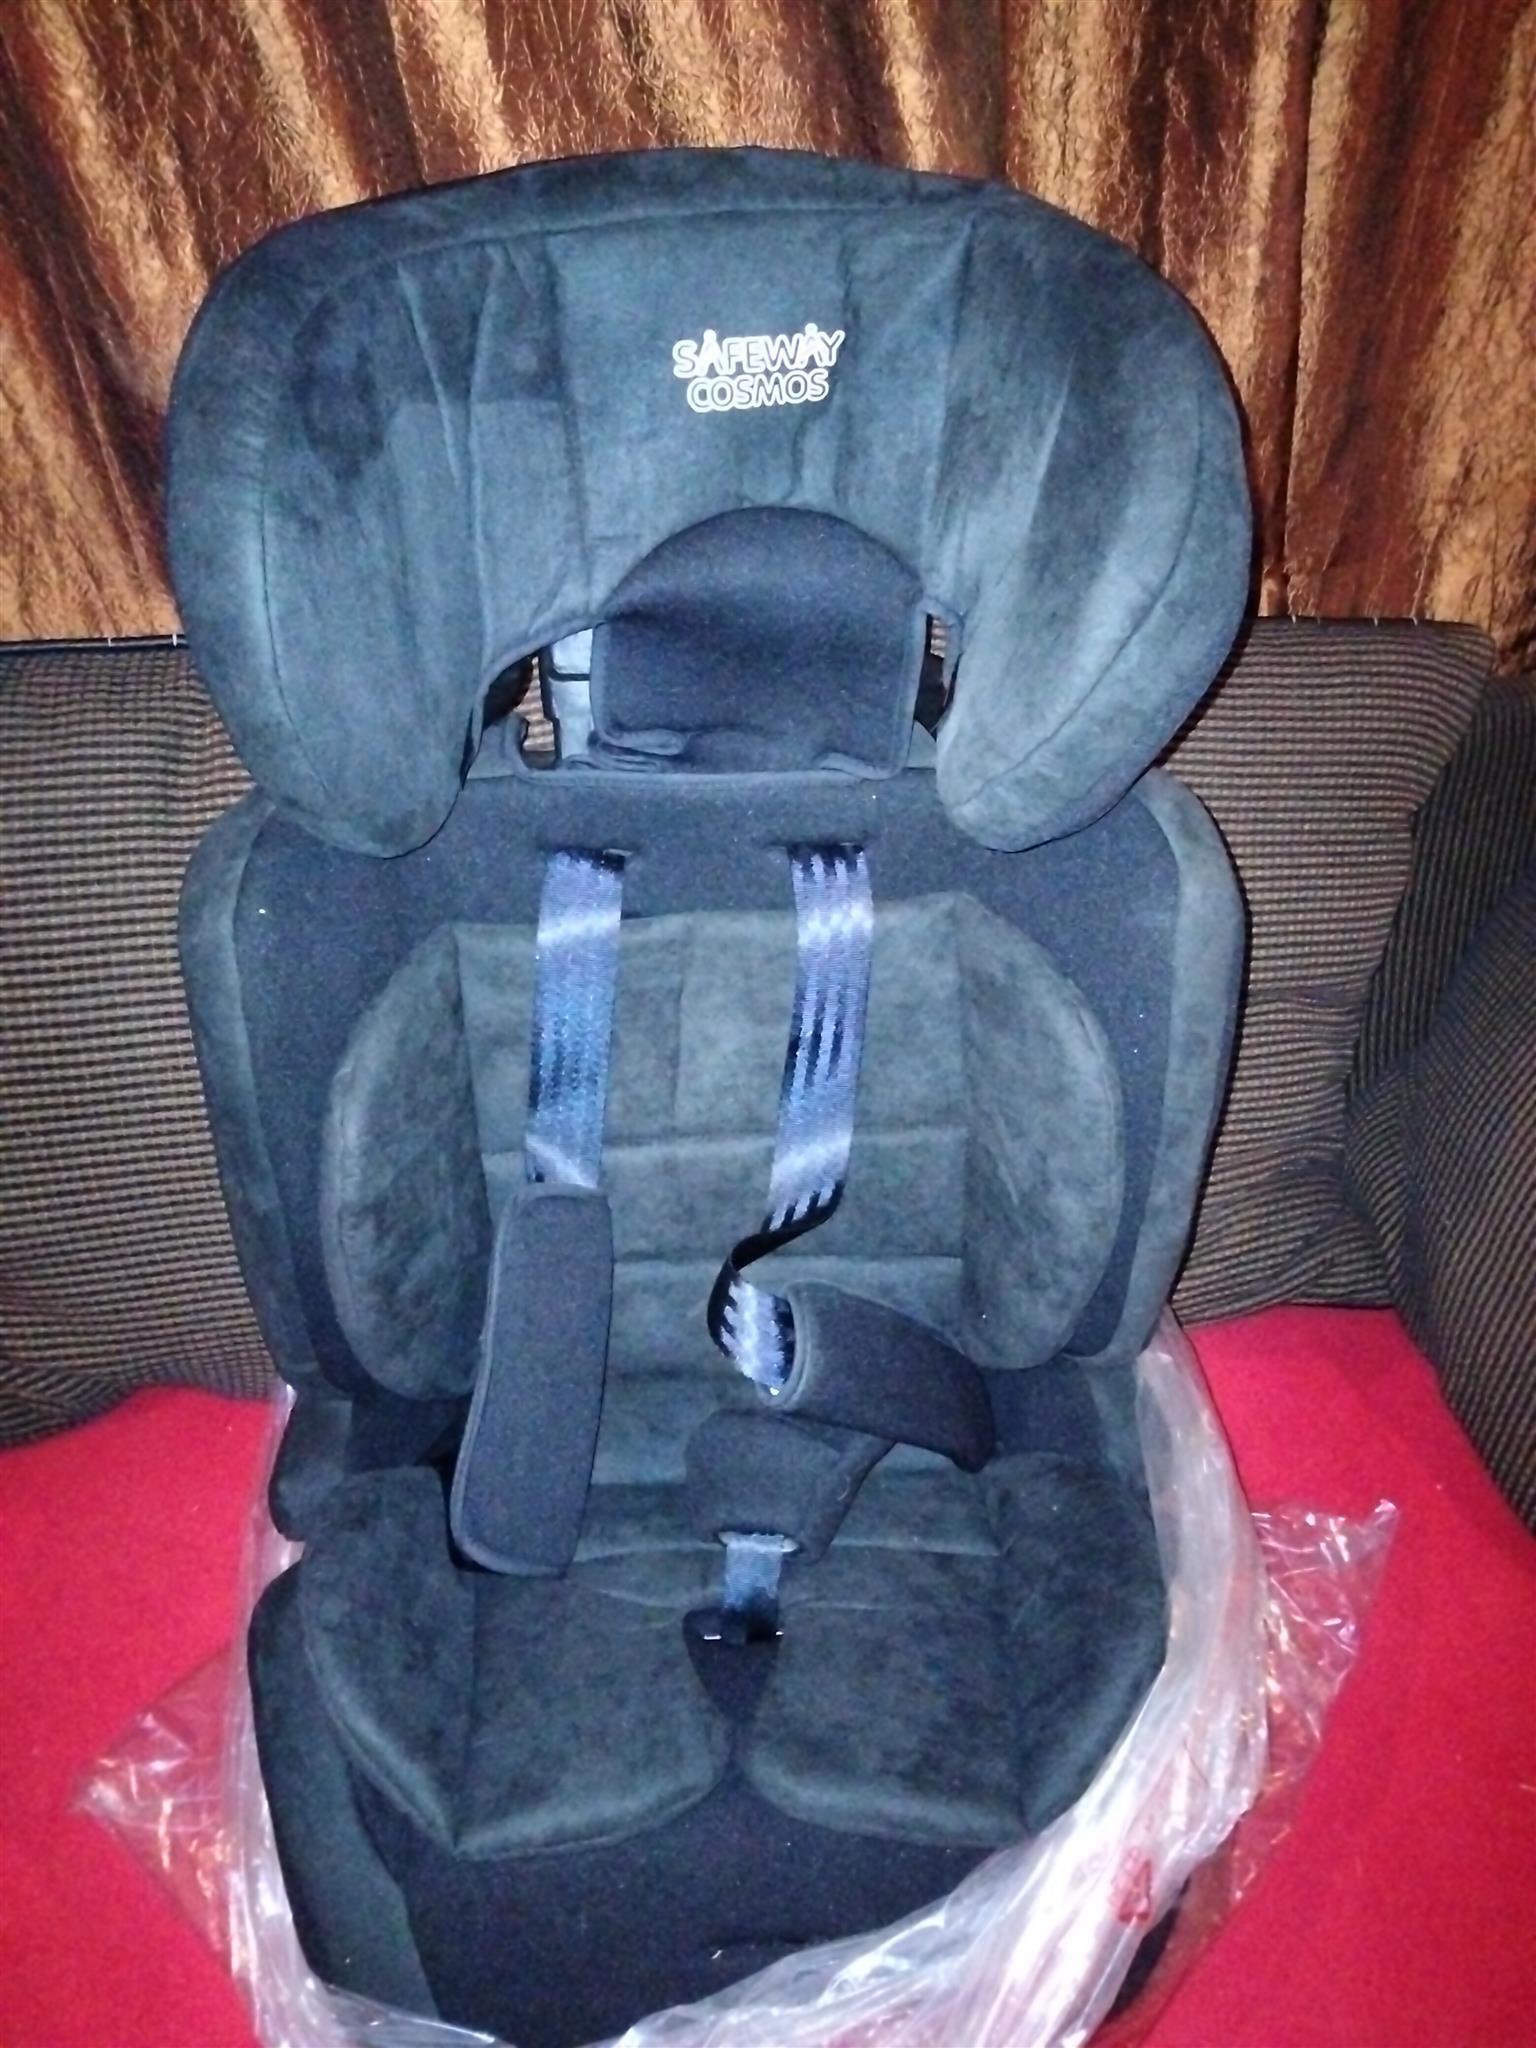 New Safeway Cosmos Baby car seat 